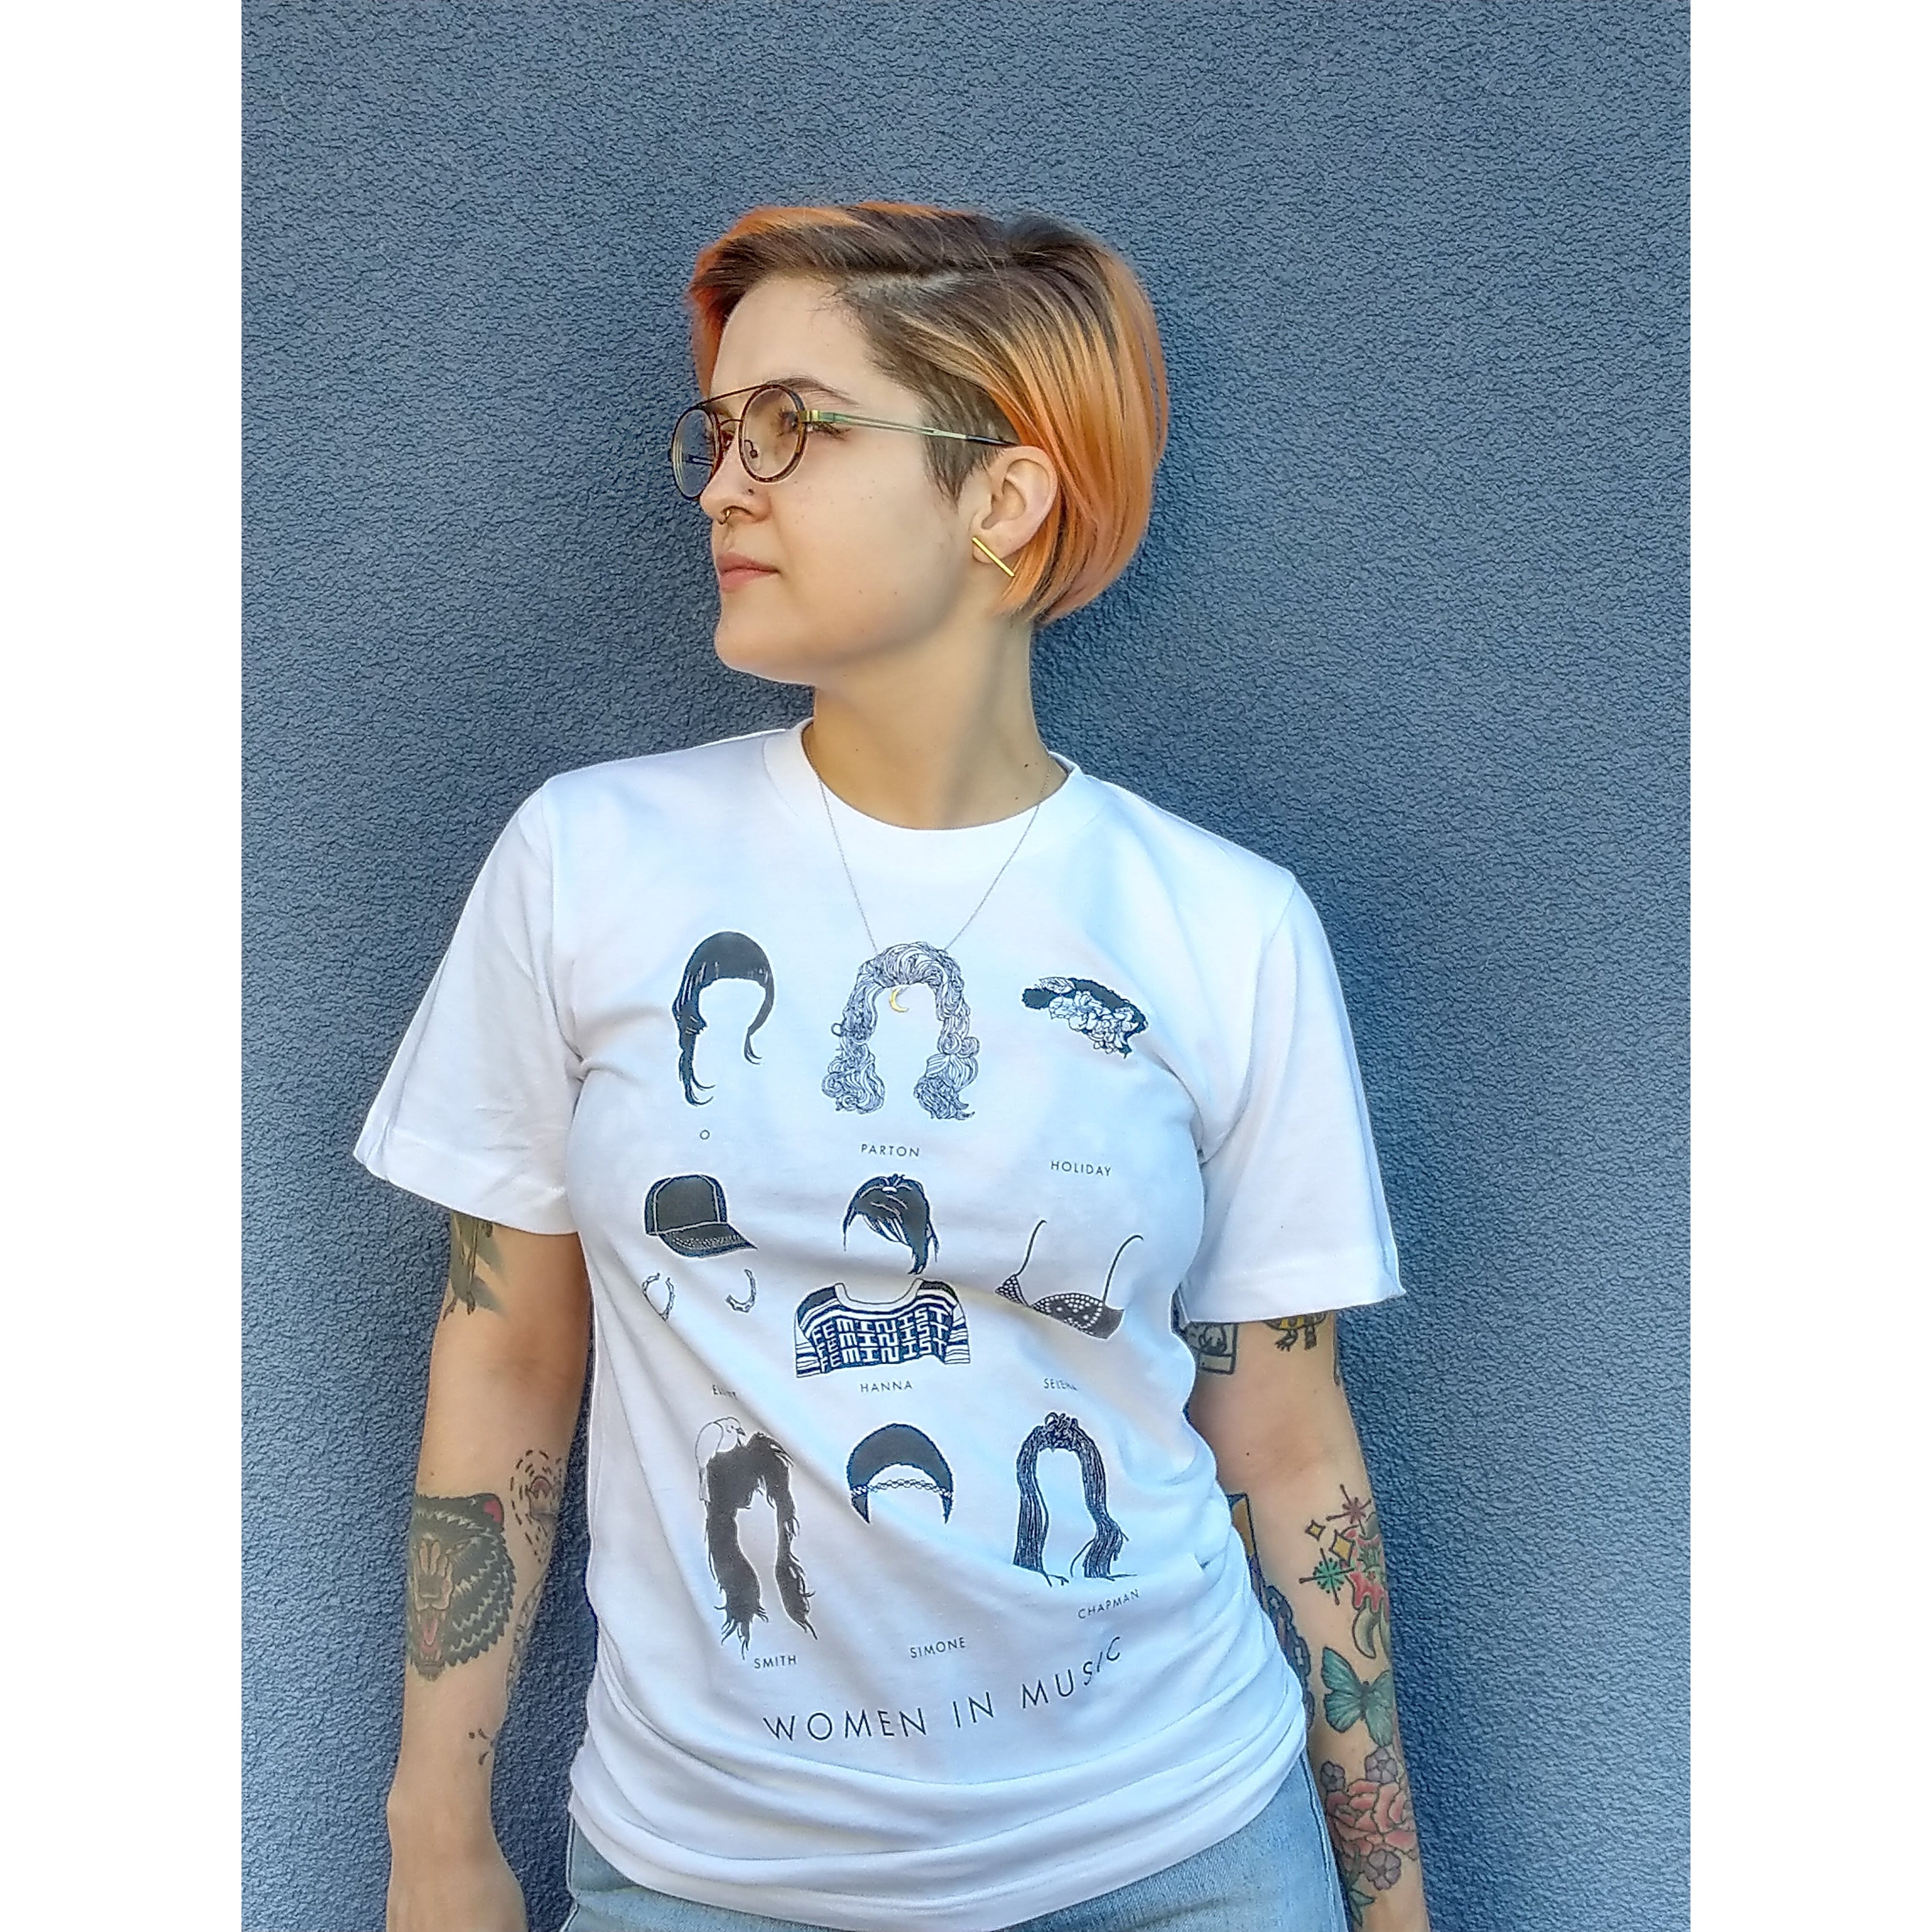 Women in Music Shirt by Stephanie Boyd-Berks | Shrill Society